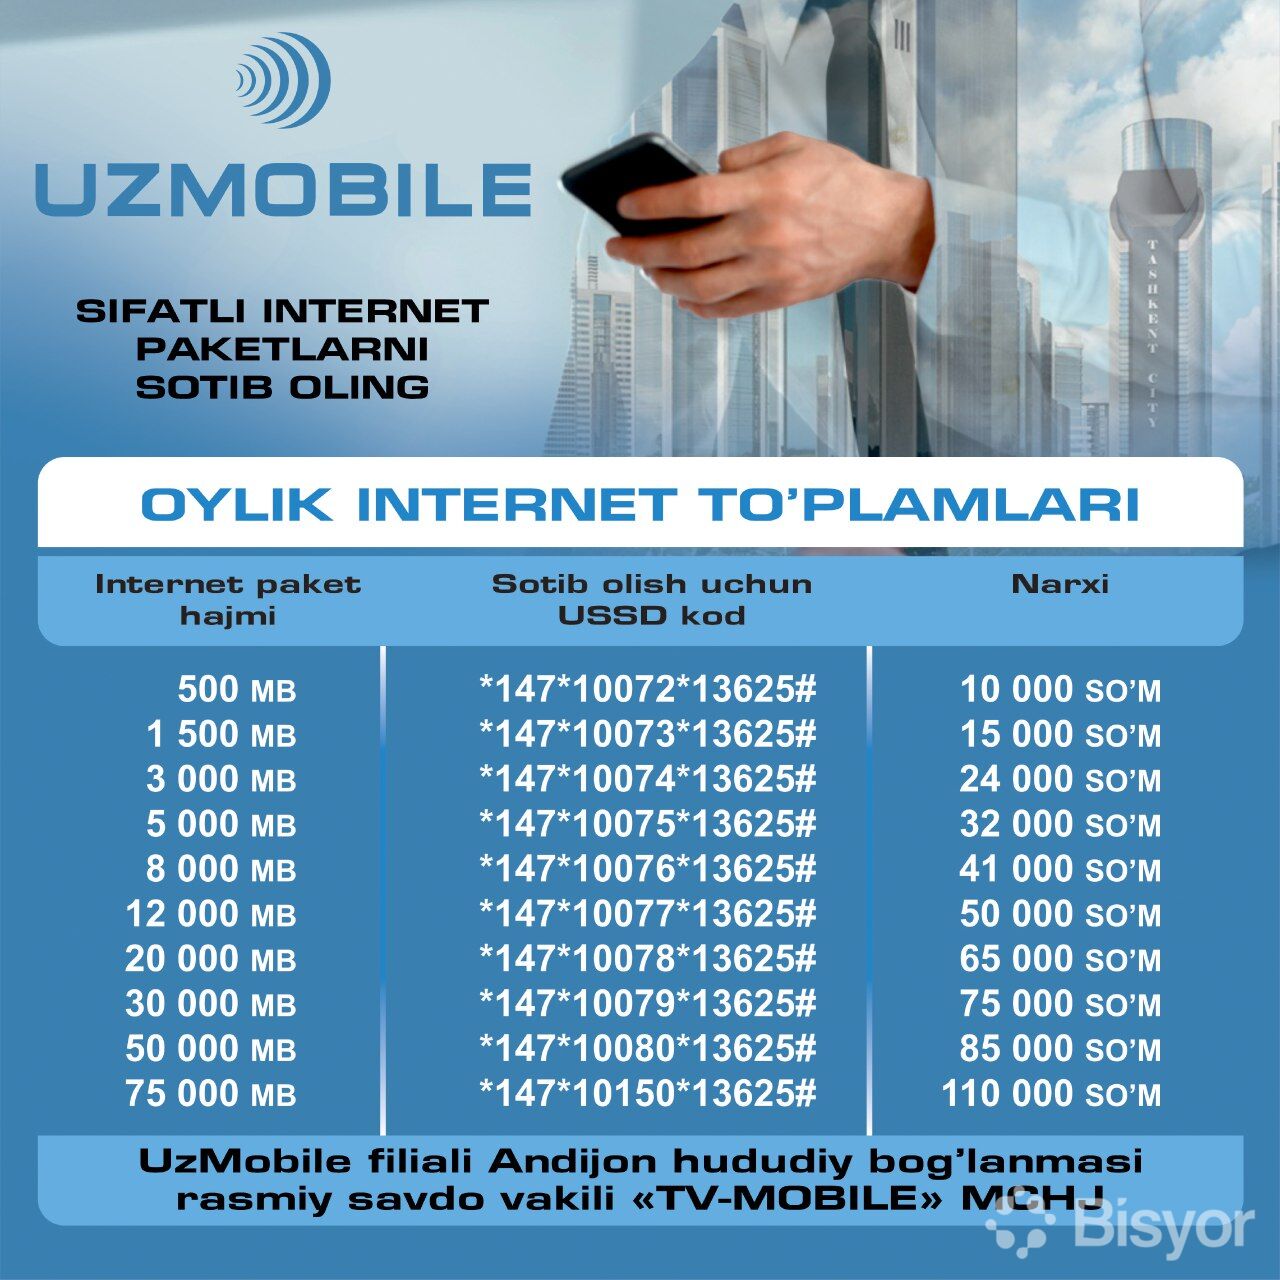 Uzmobile. Uzmobile интернет пакеты. Uzmobile Internet paket. Узмобайл интернет. Пакет Узмобайл интернет пакеты.